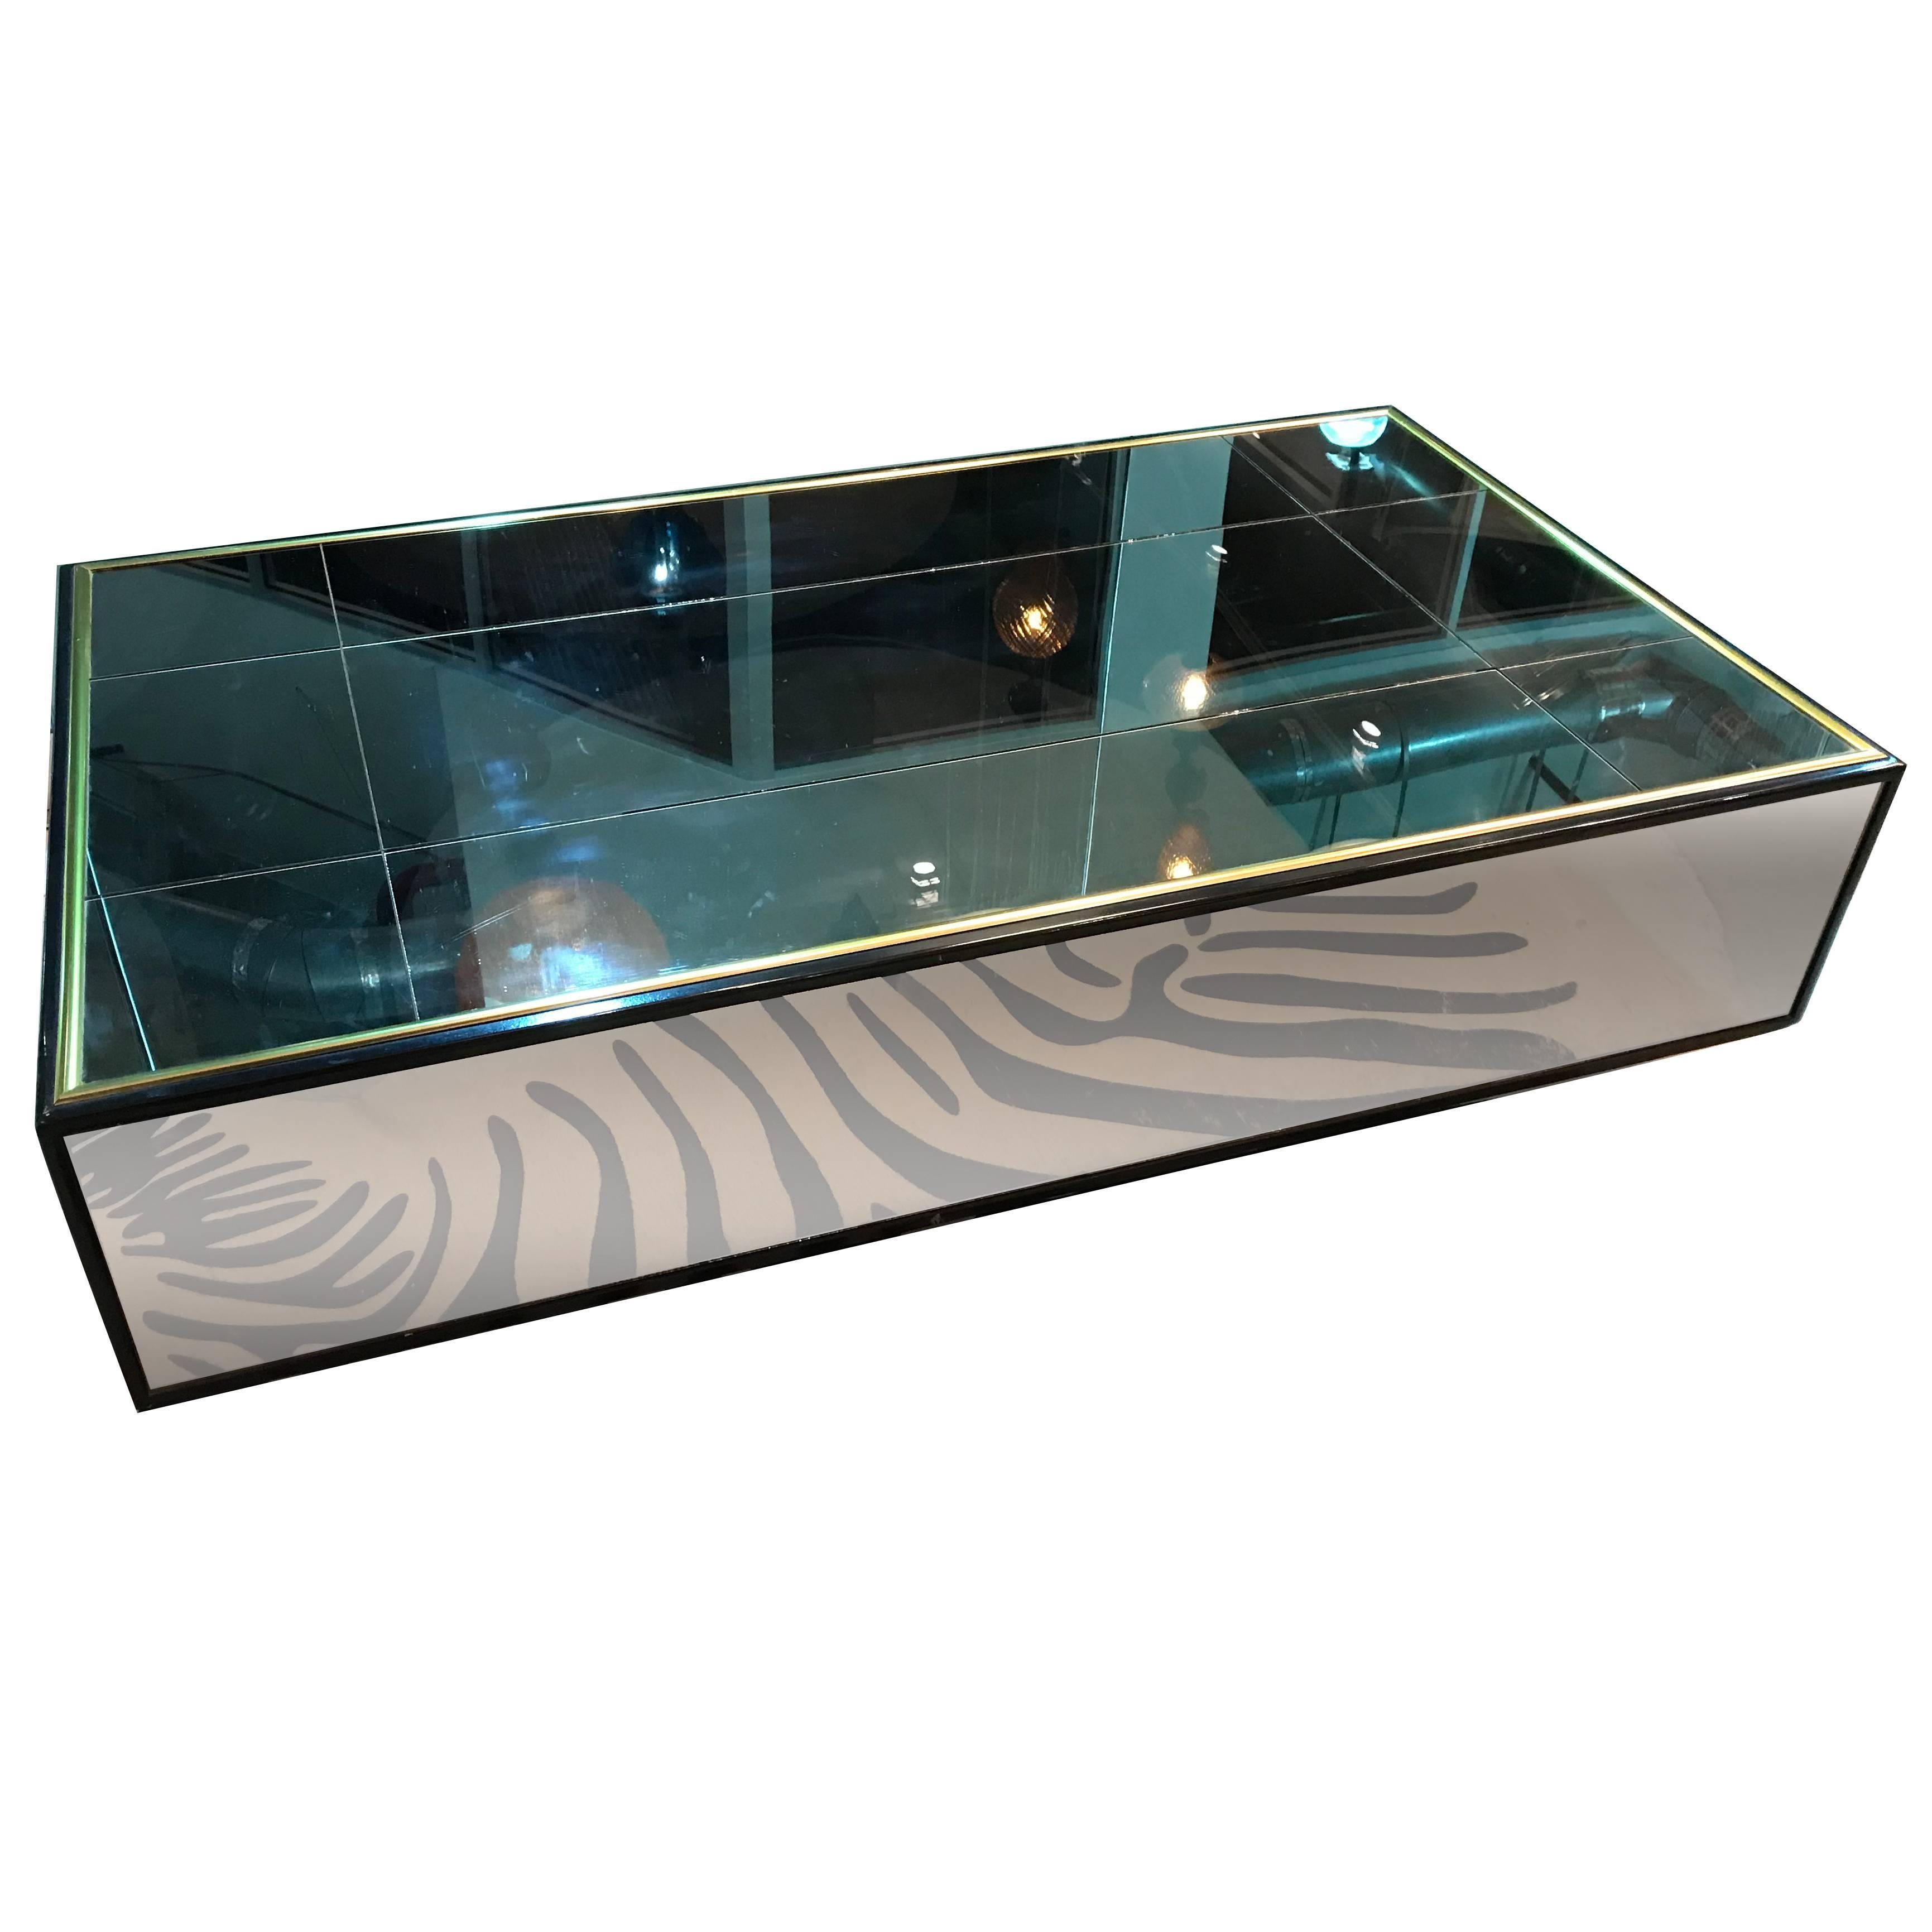 Mirrored Coffee Table, Lg Century Similar to One in Yves Saint Laurent Paris Apt